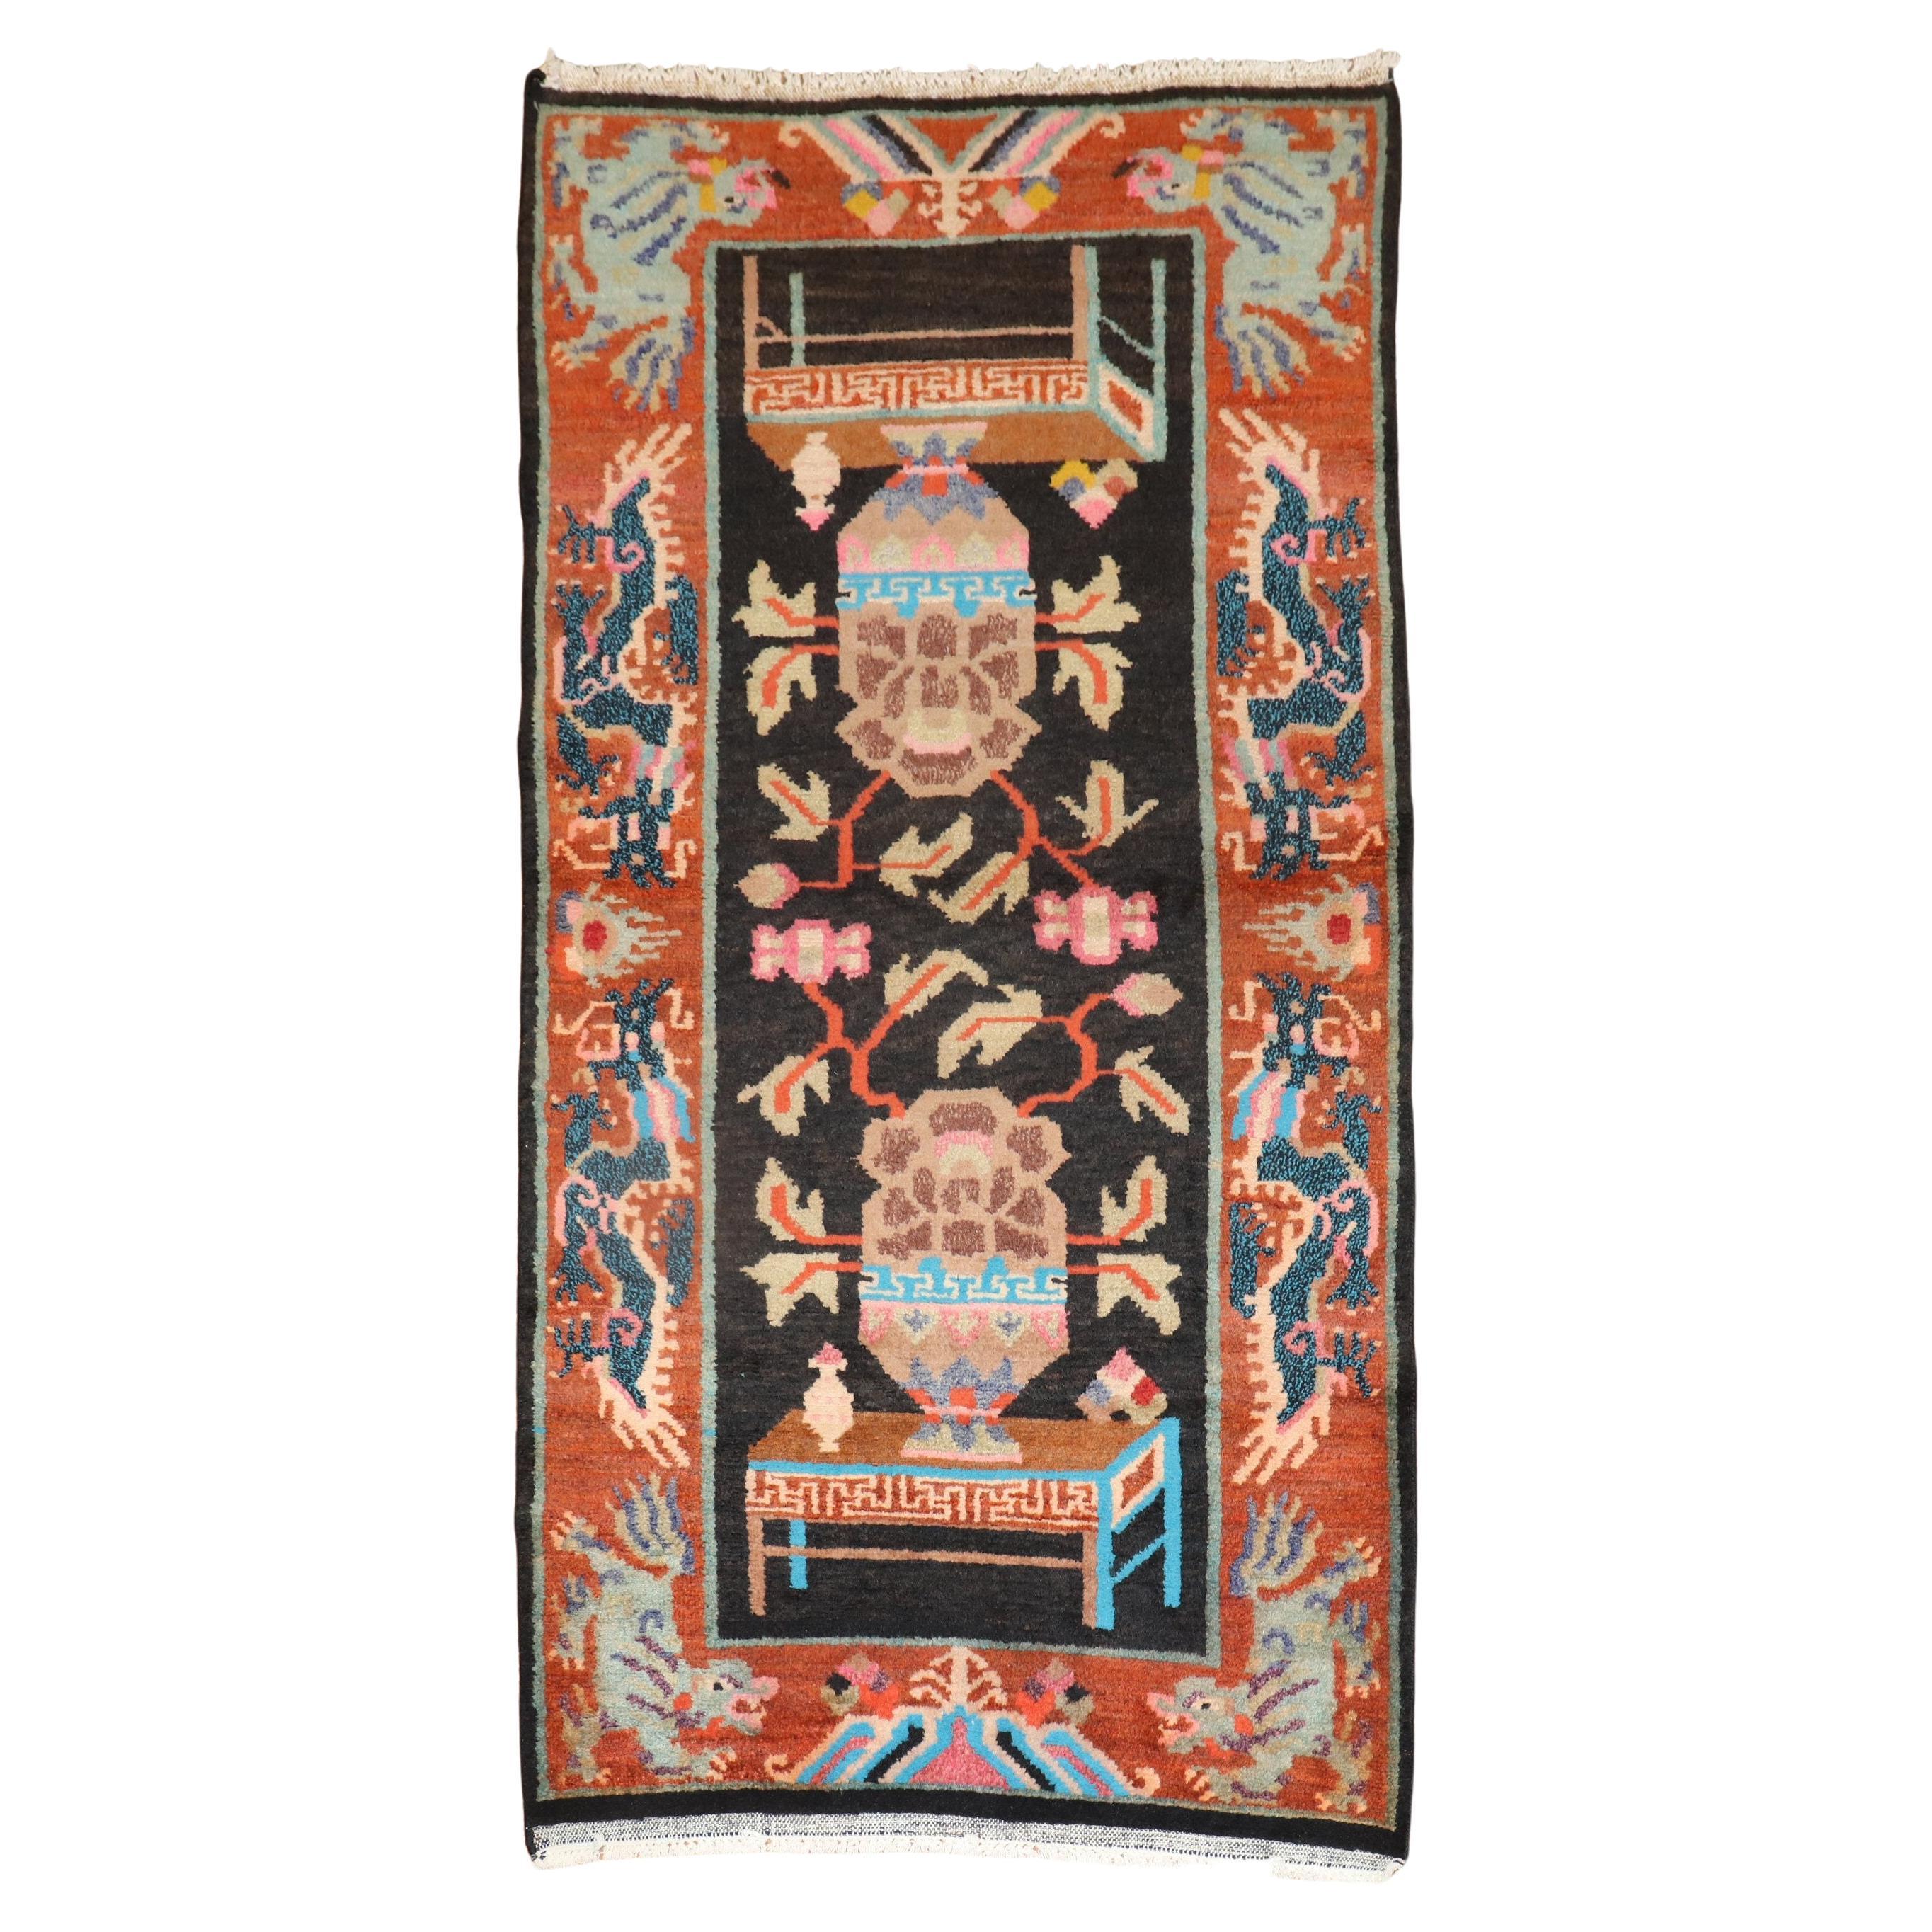 Quirky Vintage Tibetan Rug